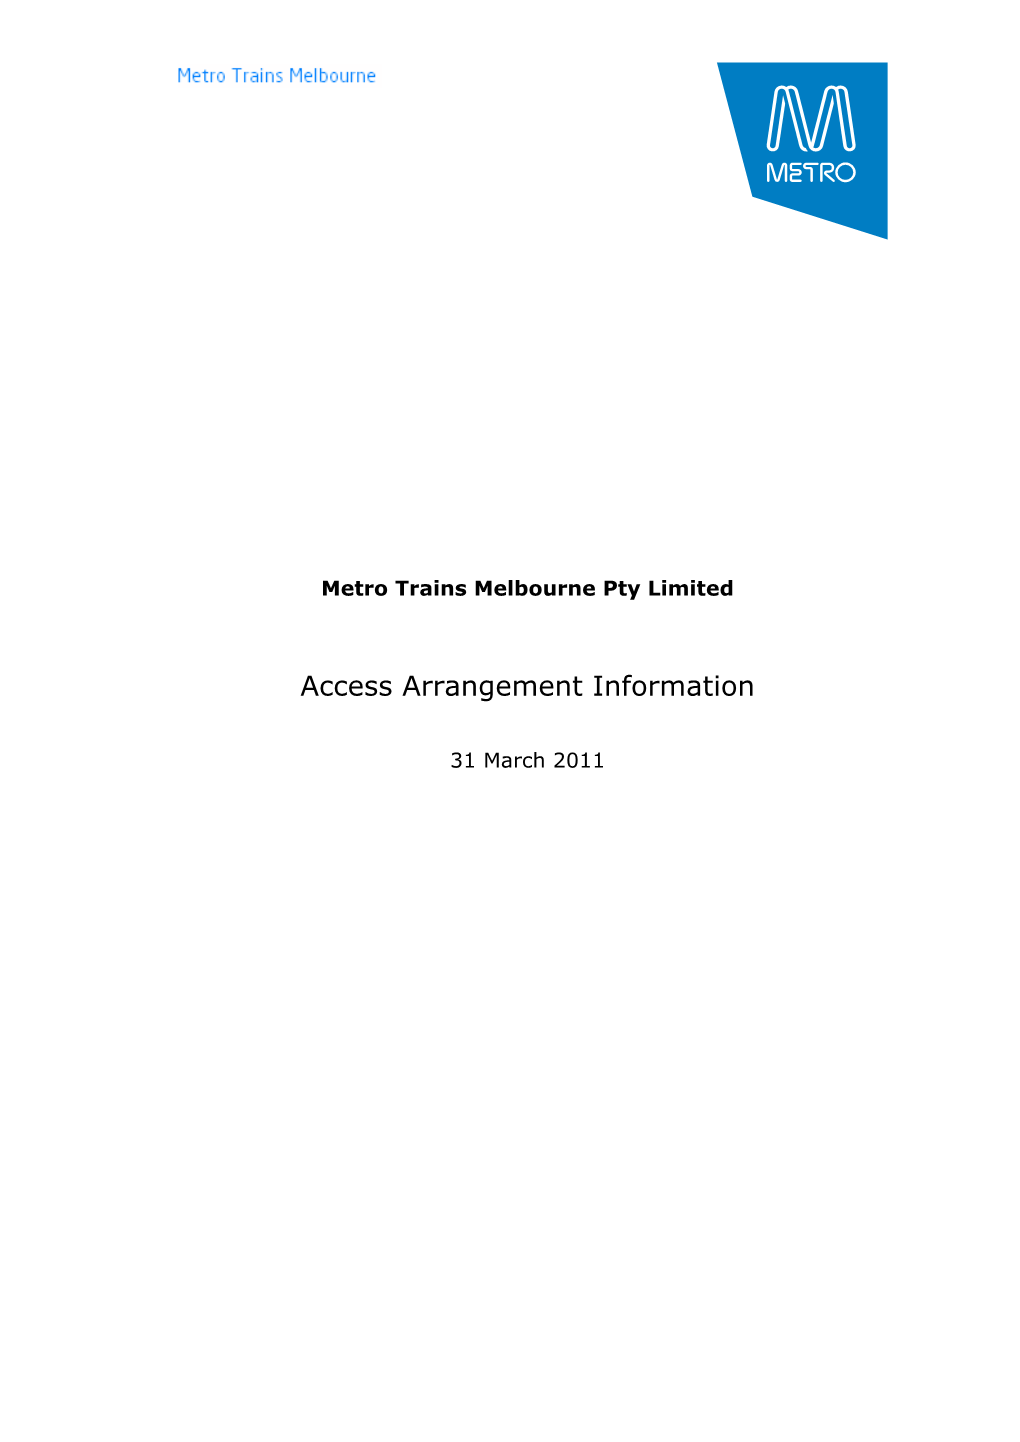 Access Arrangement Information